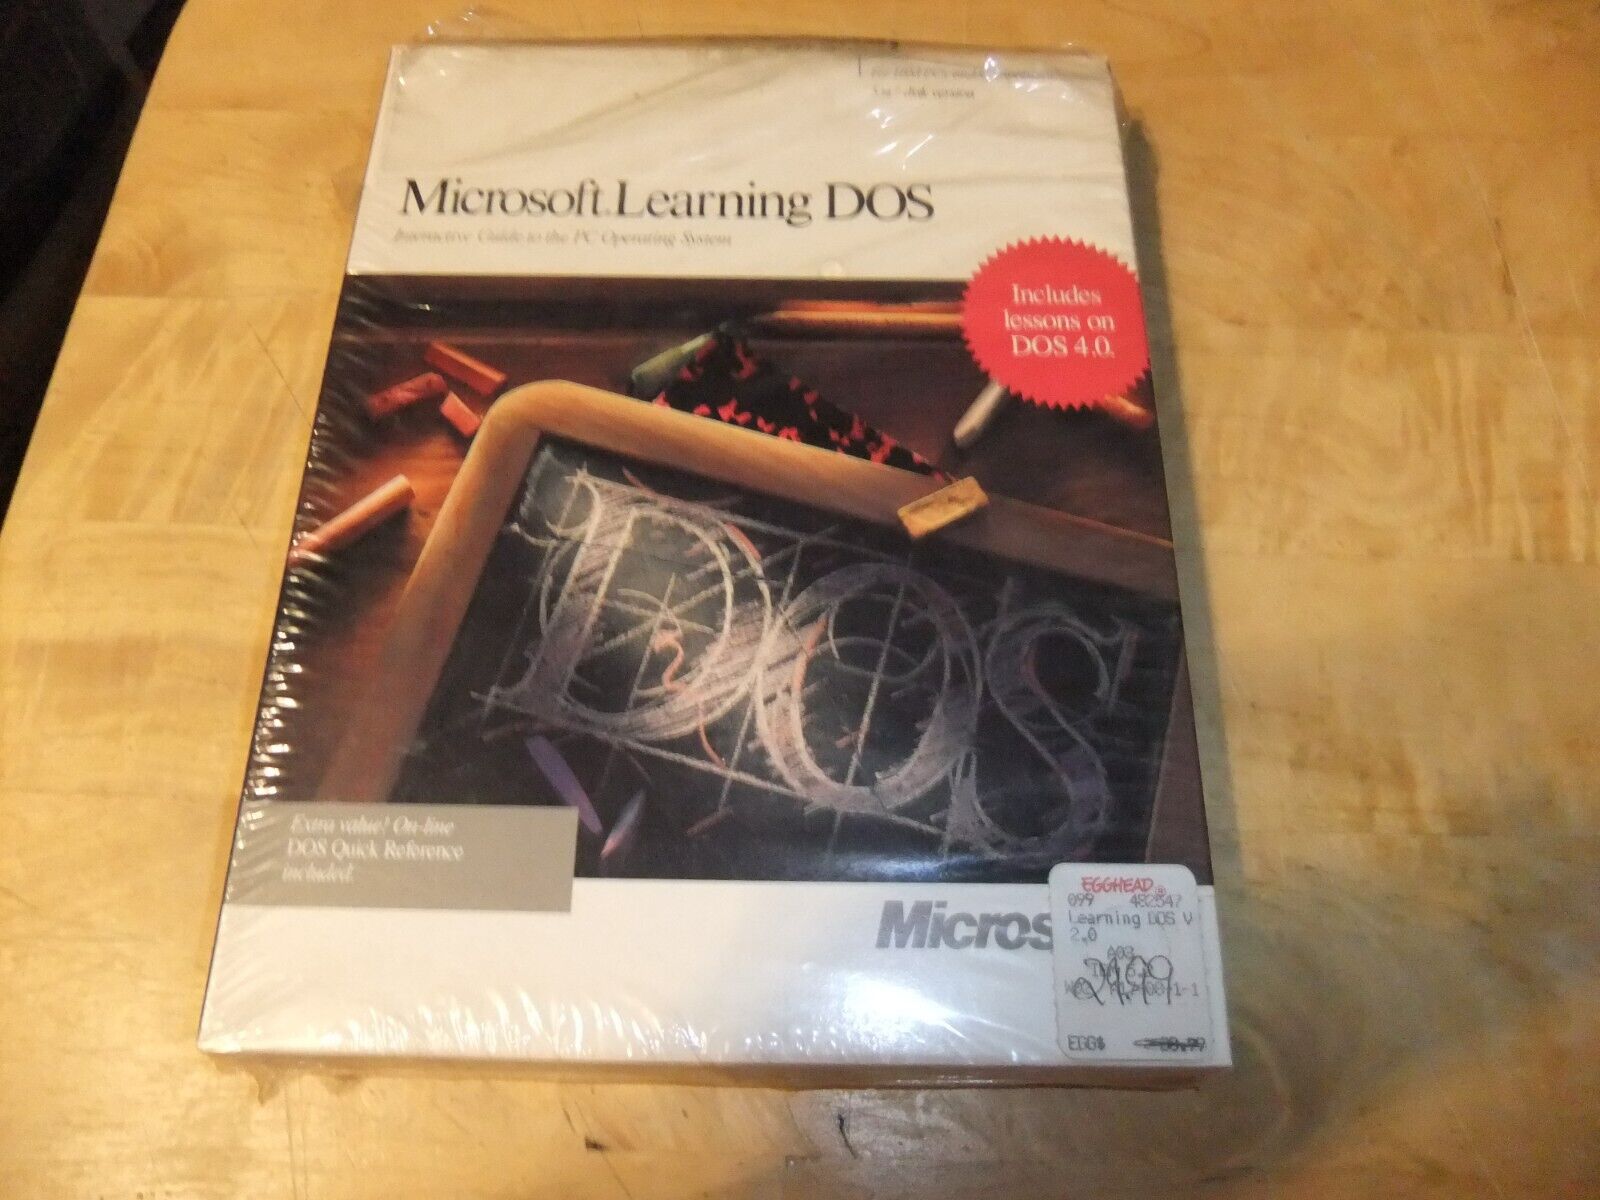 VTG 1988 Microsoft Learning DOS 5.25